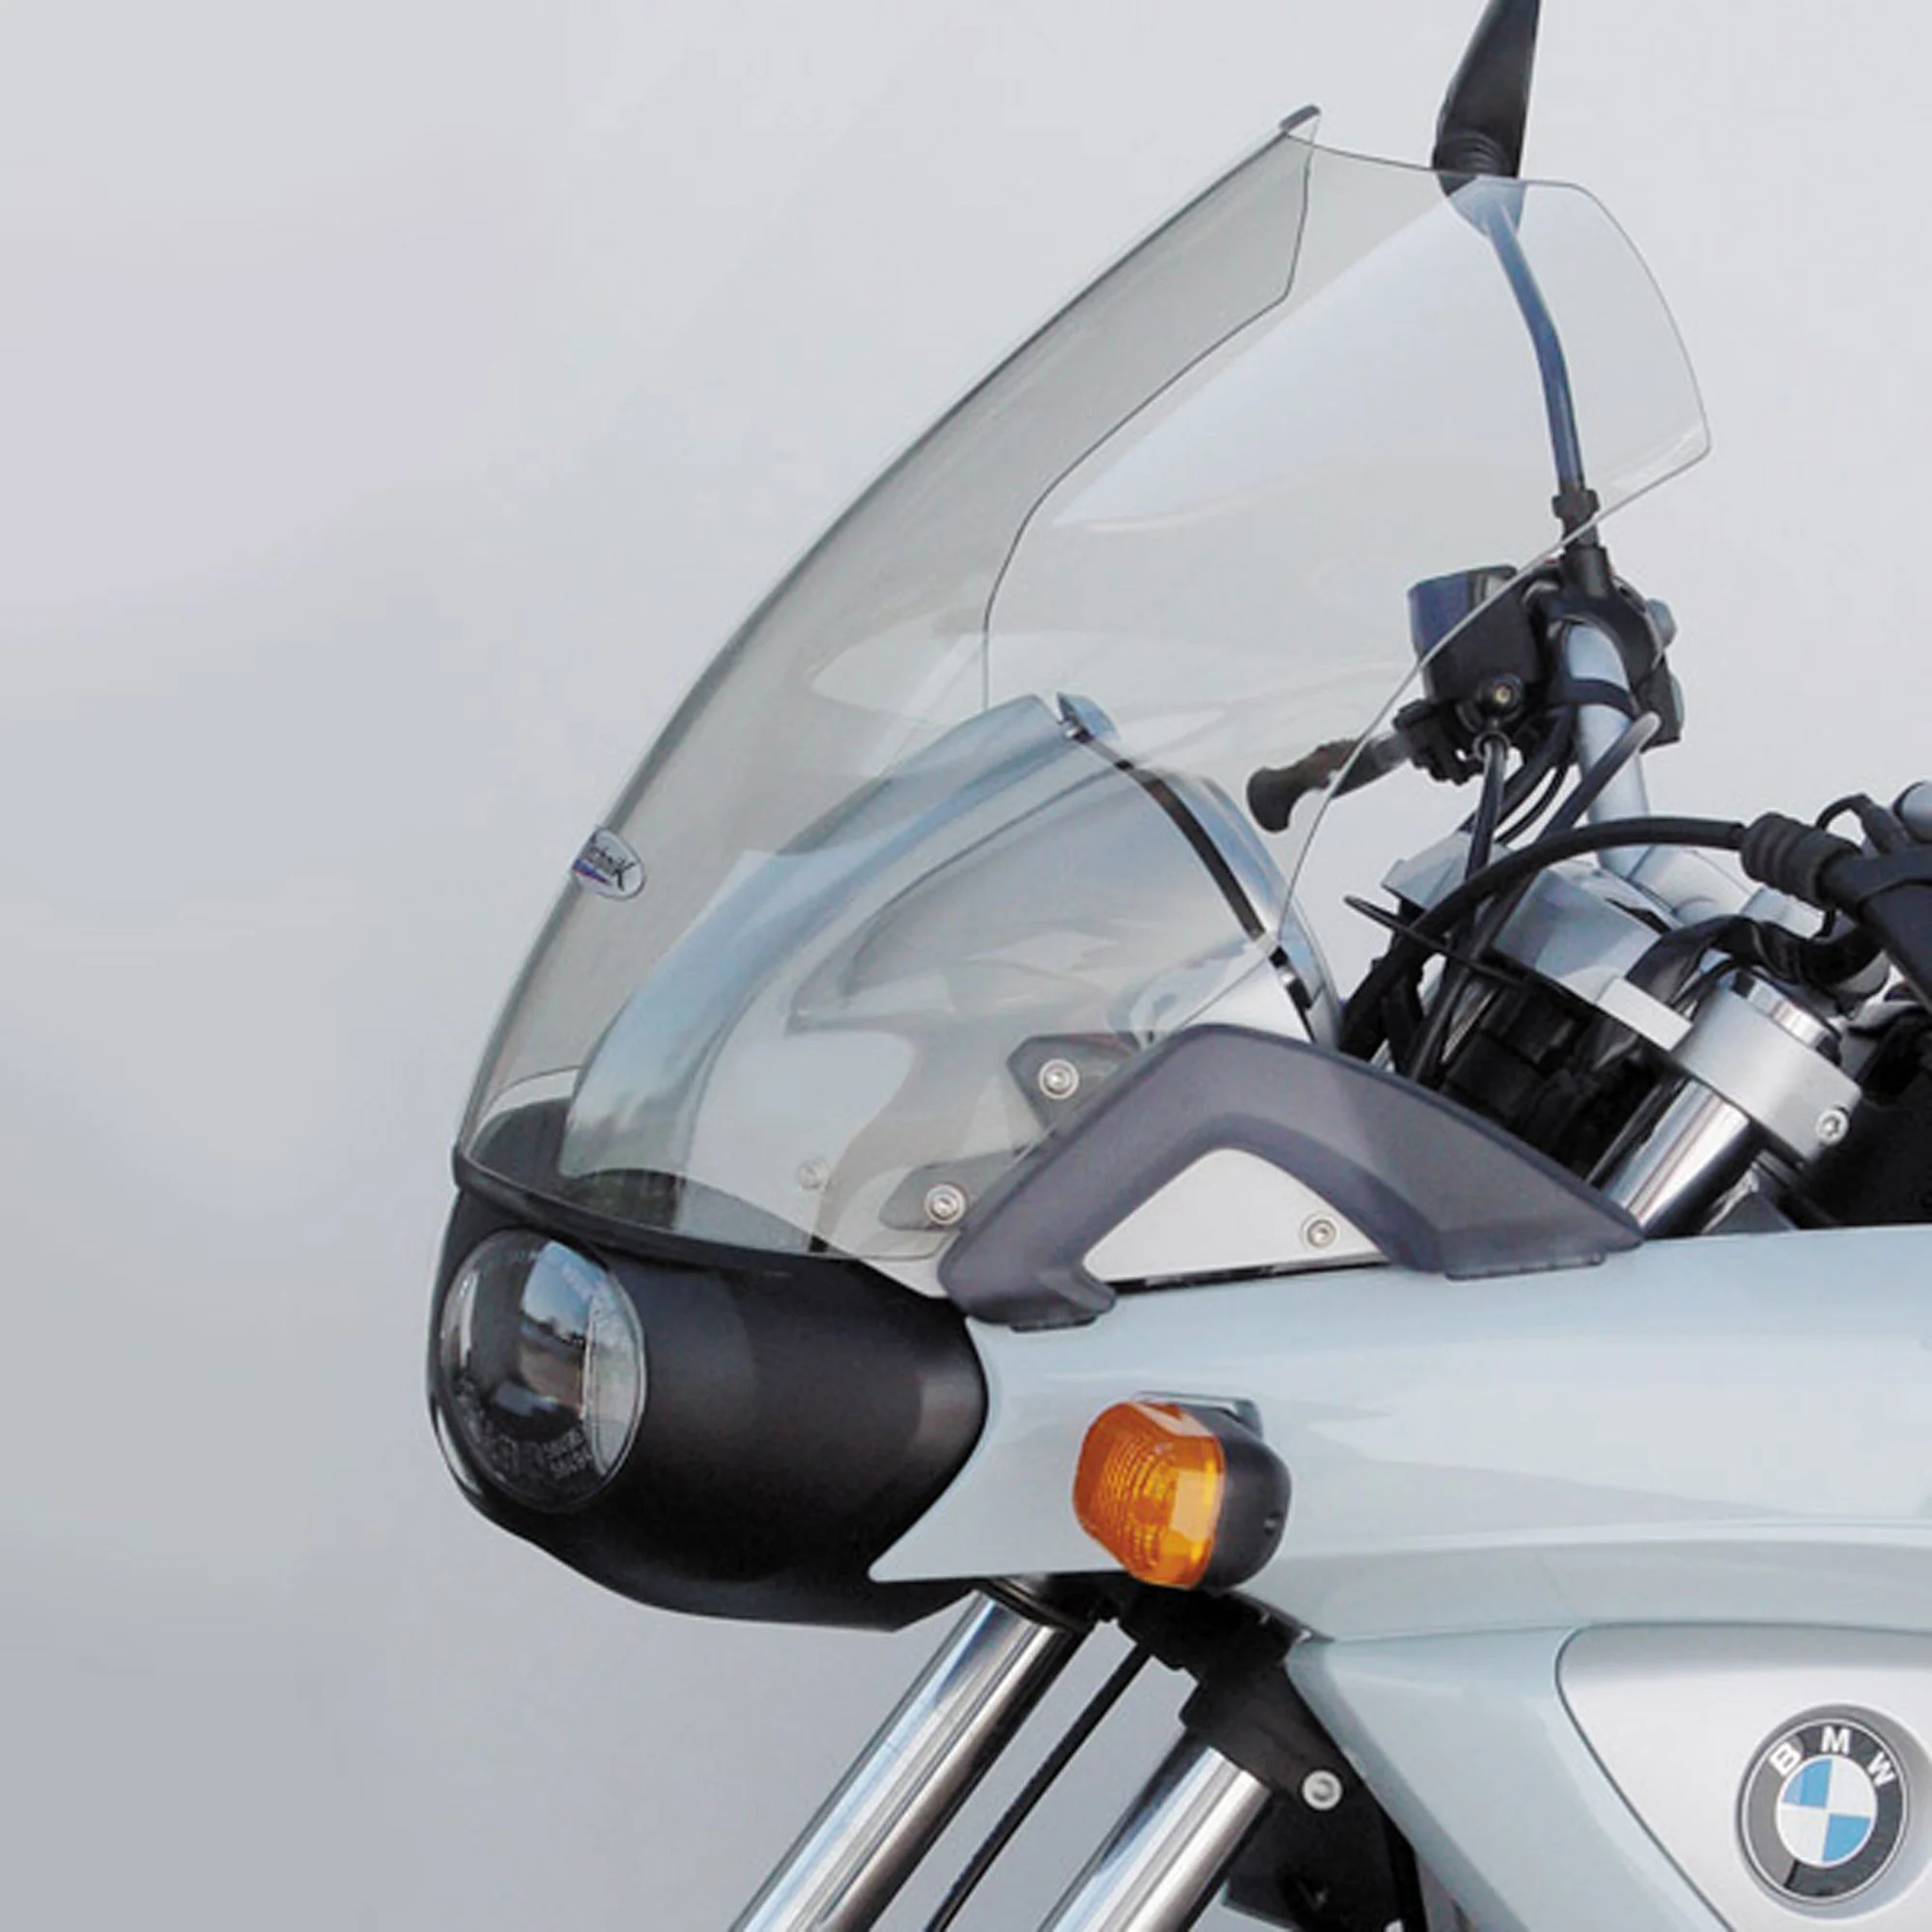 Introducing our long-term BMW F900R, GRR Garage